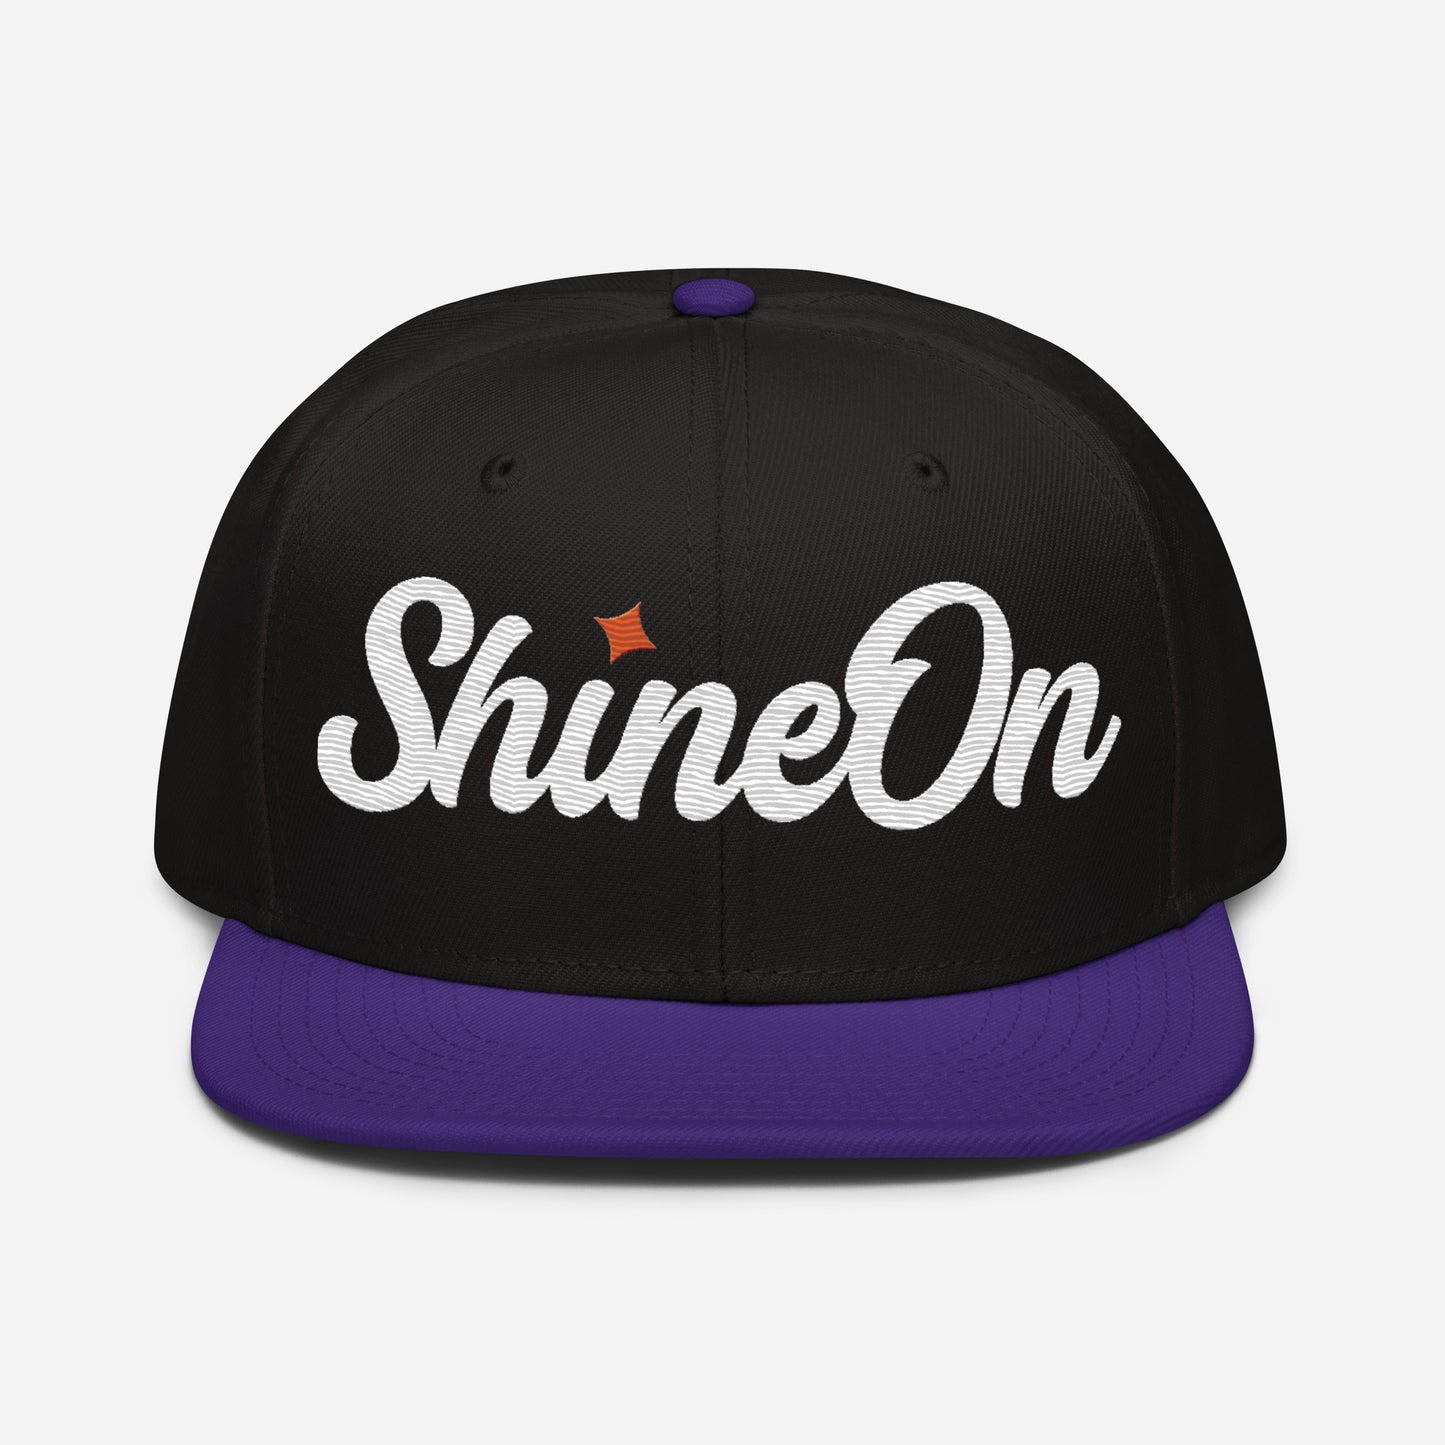 ShineOn Snapback Hat